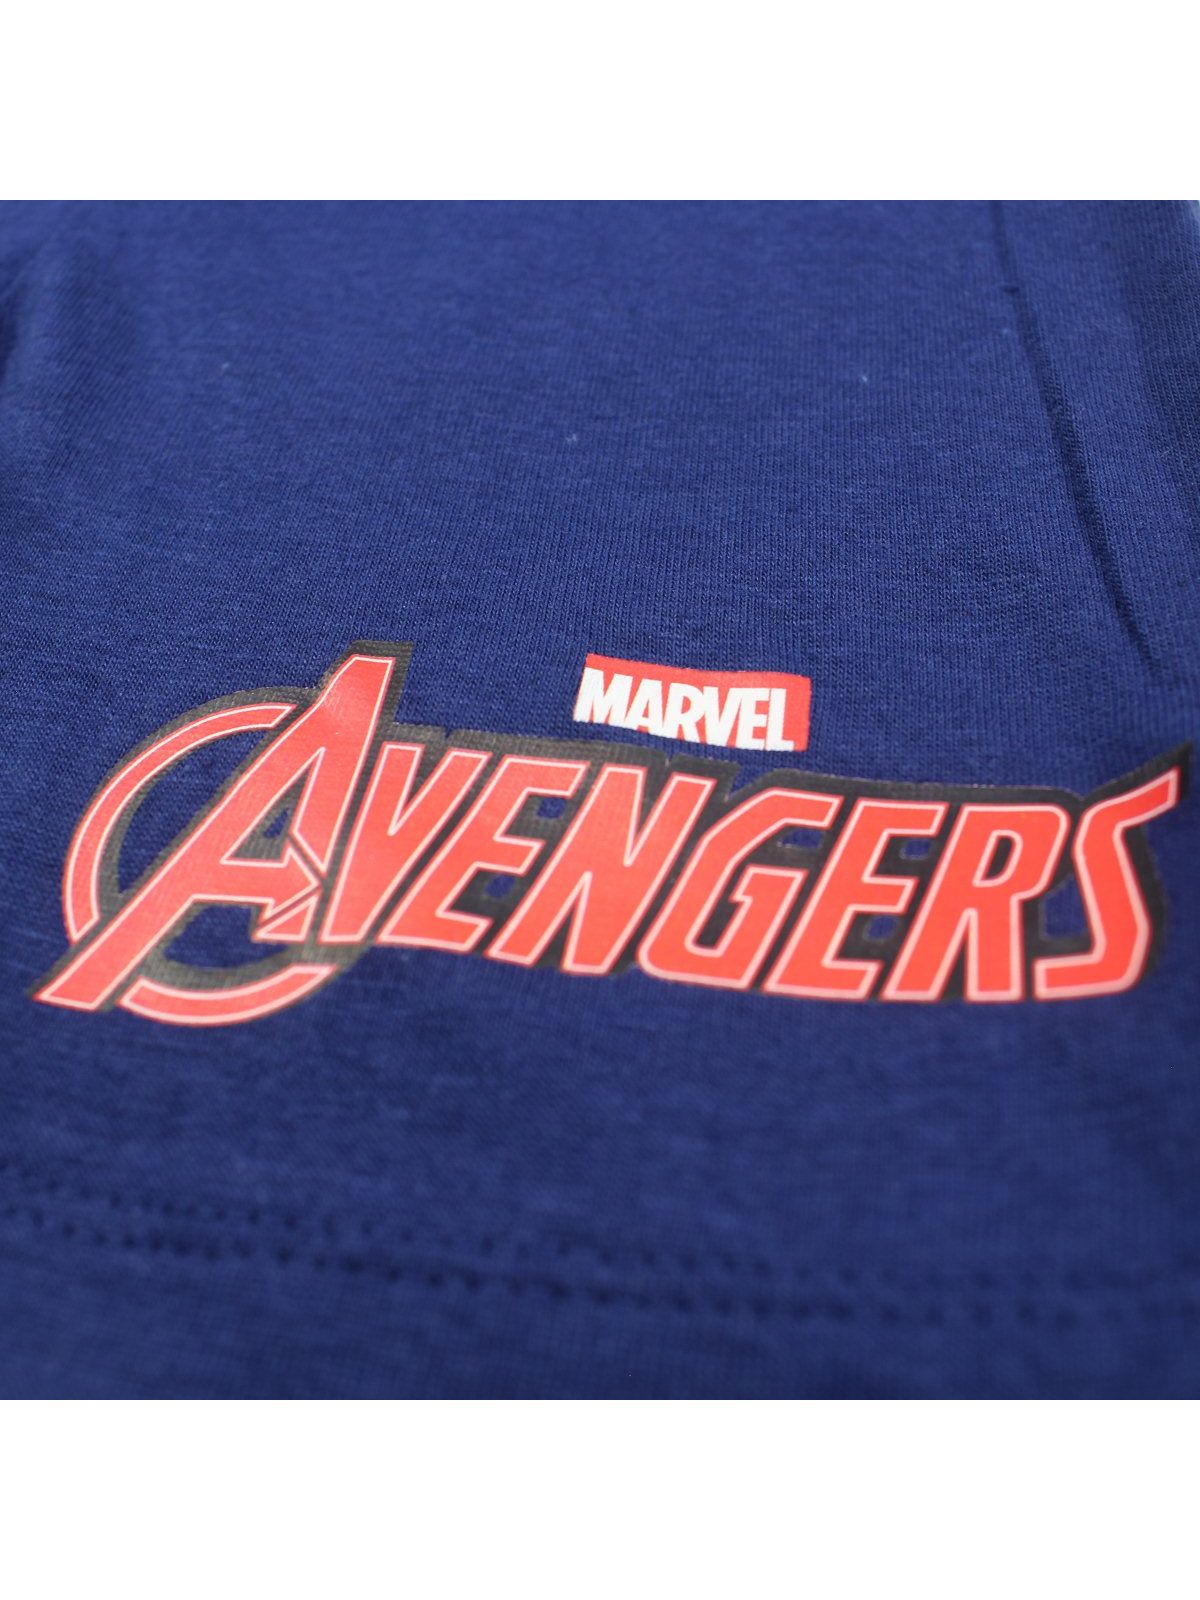 Avengers-Set.